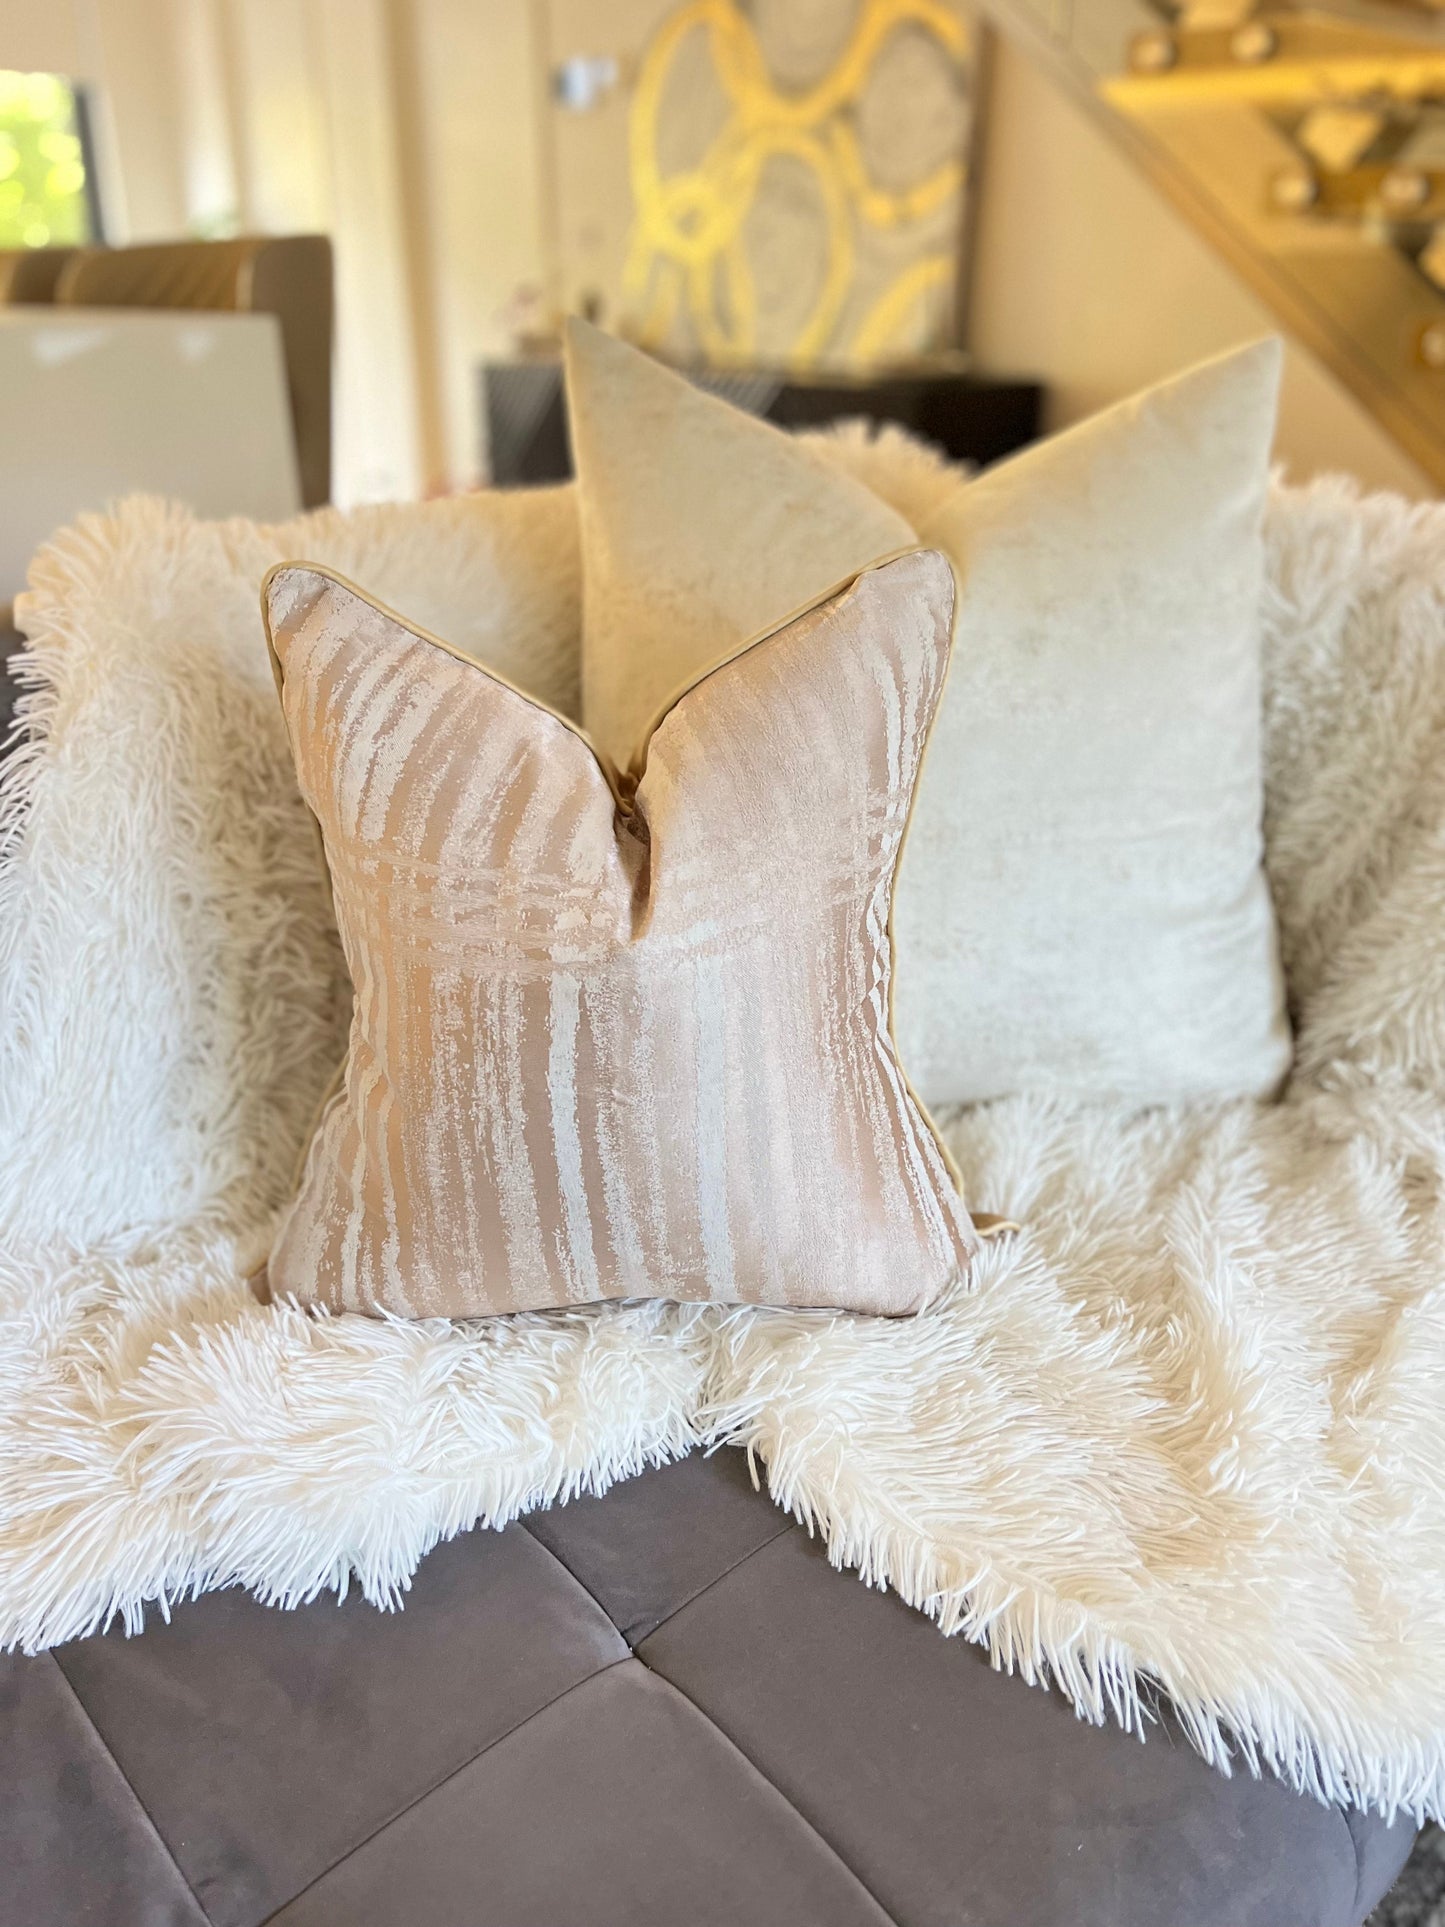 sofa-furniture-cushions-Cover-Pillow-Throw Blankets